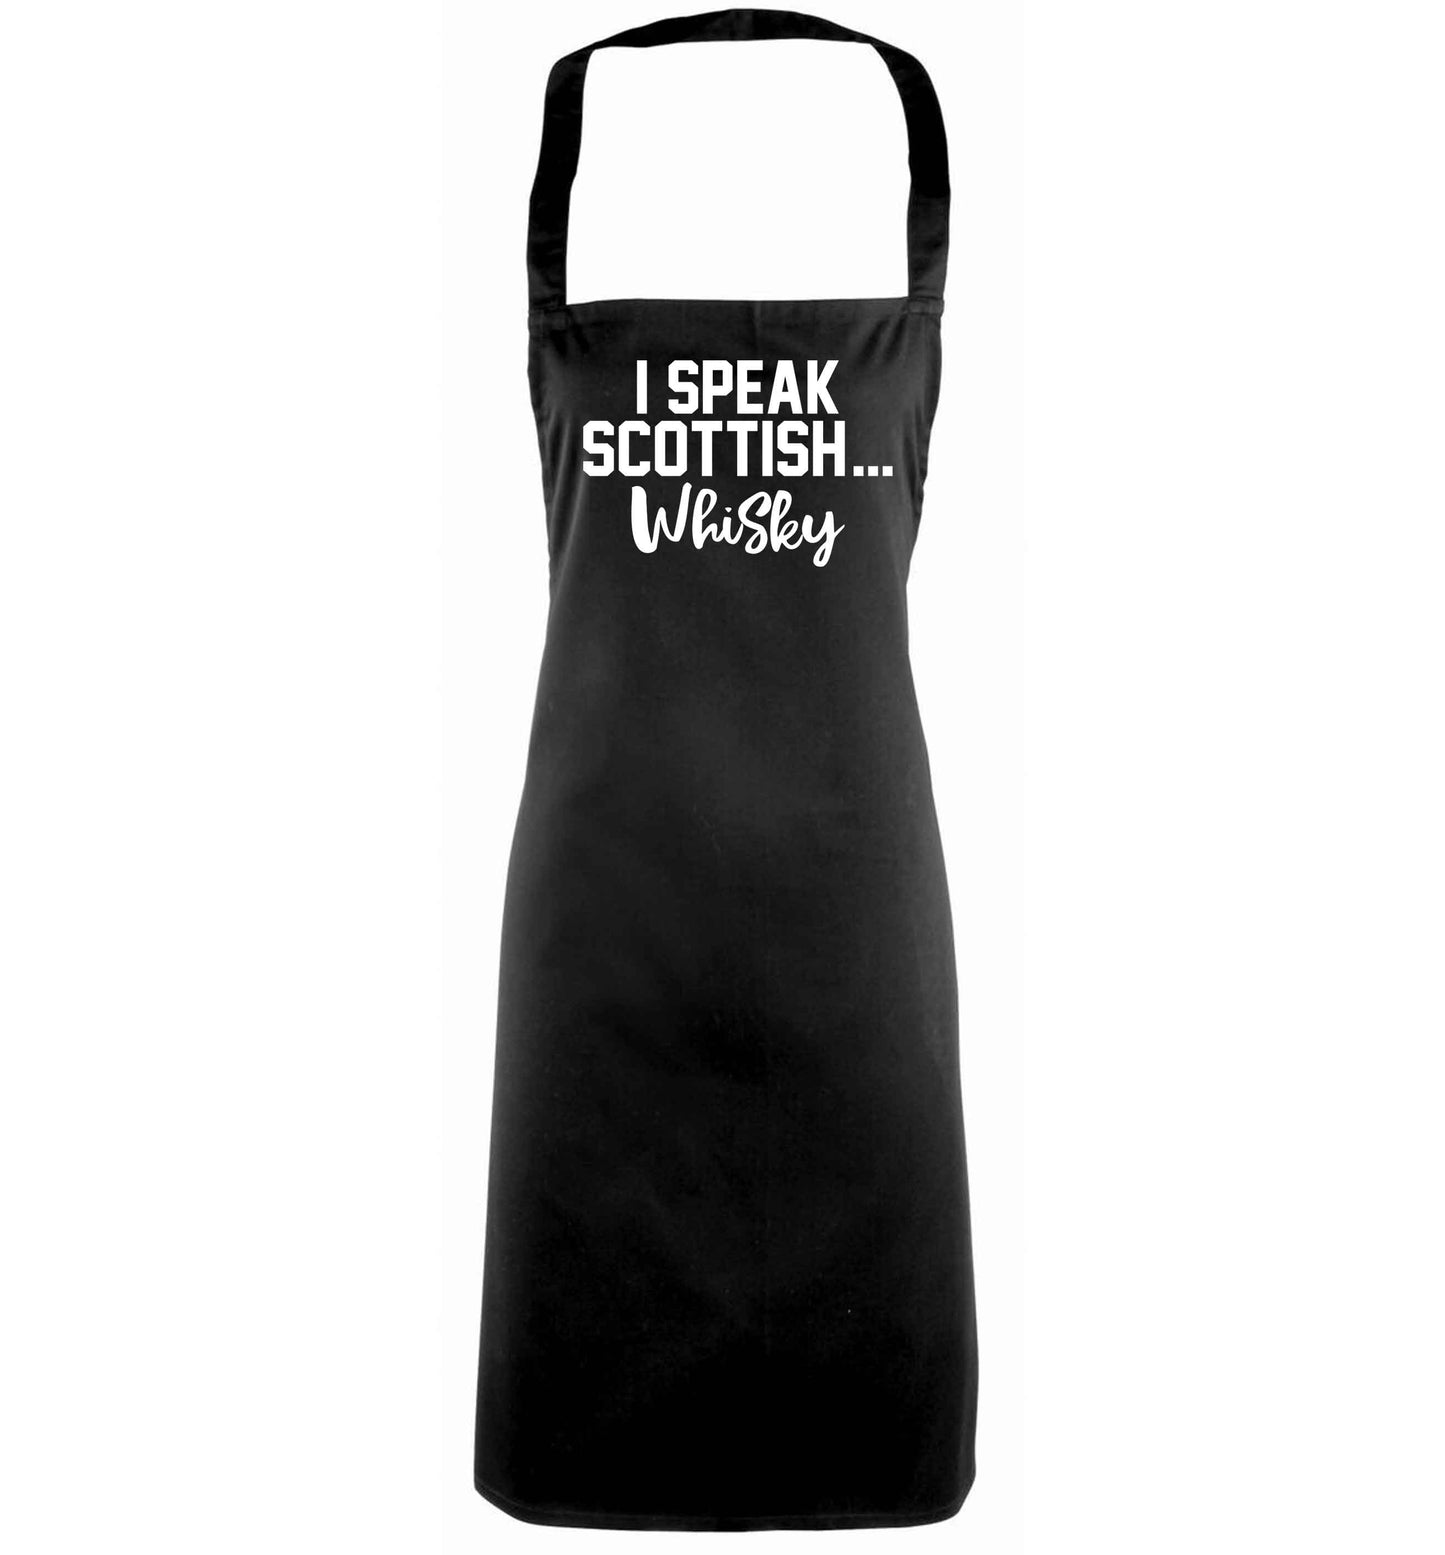 I speak scottish...whisky black apron